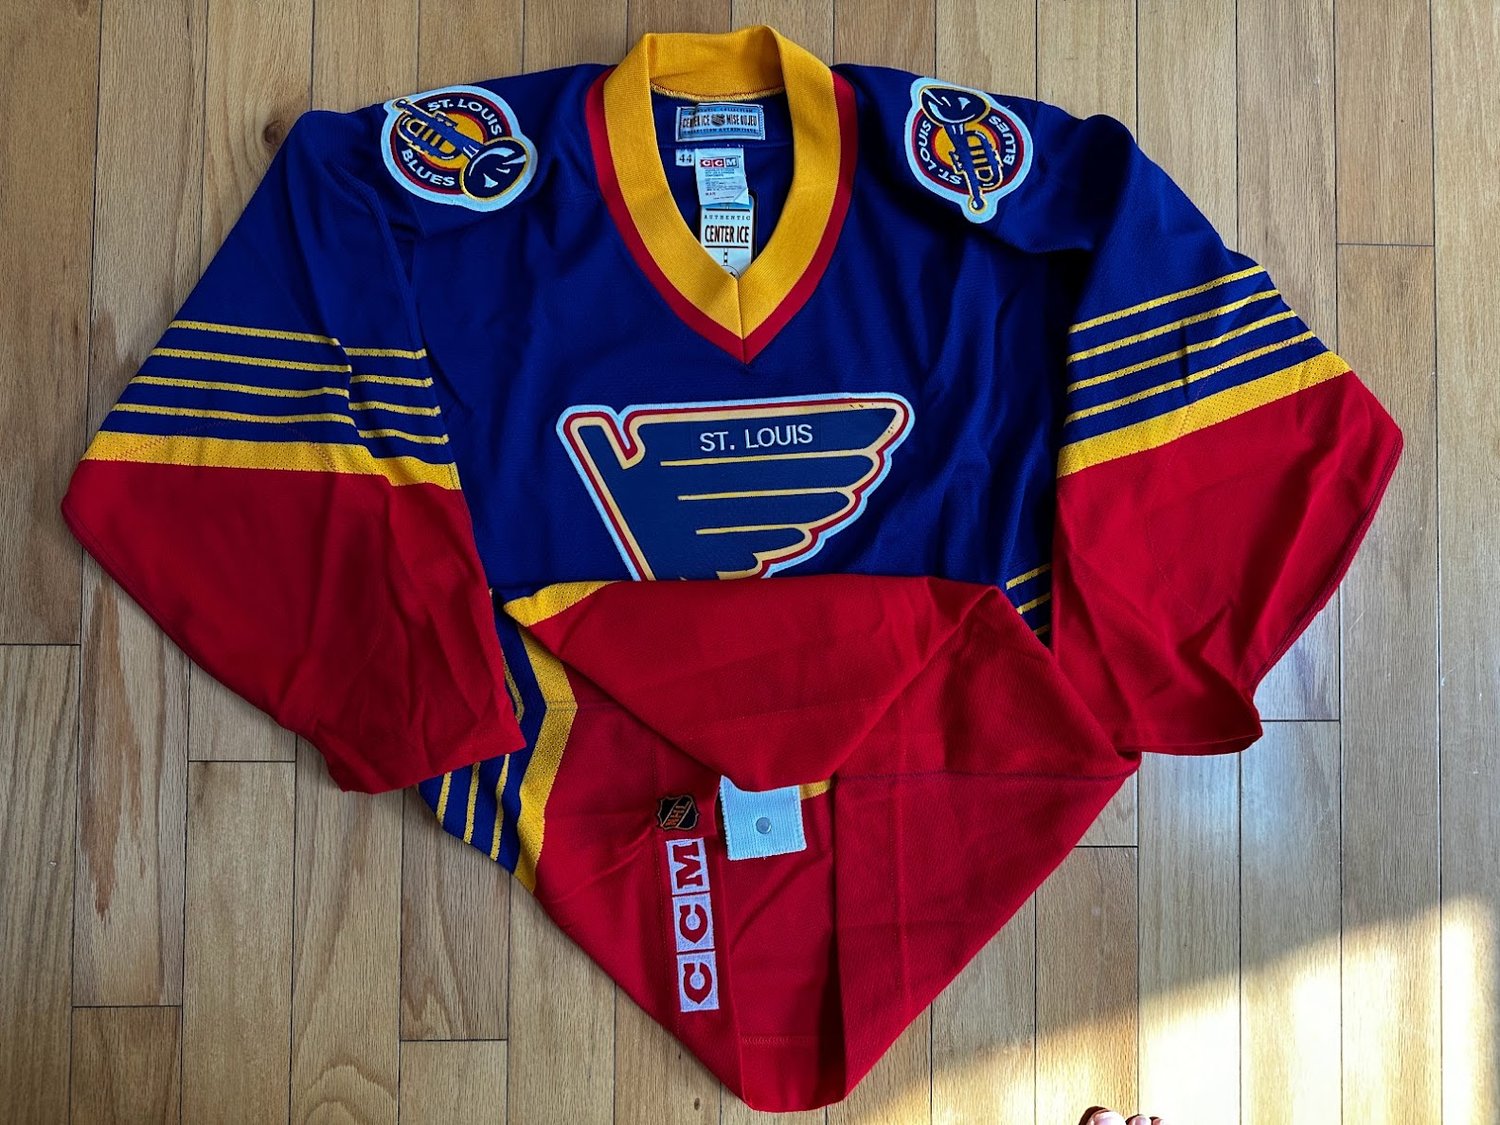 St.Louis Blues home jersey blank size 46